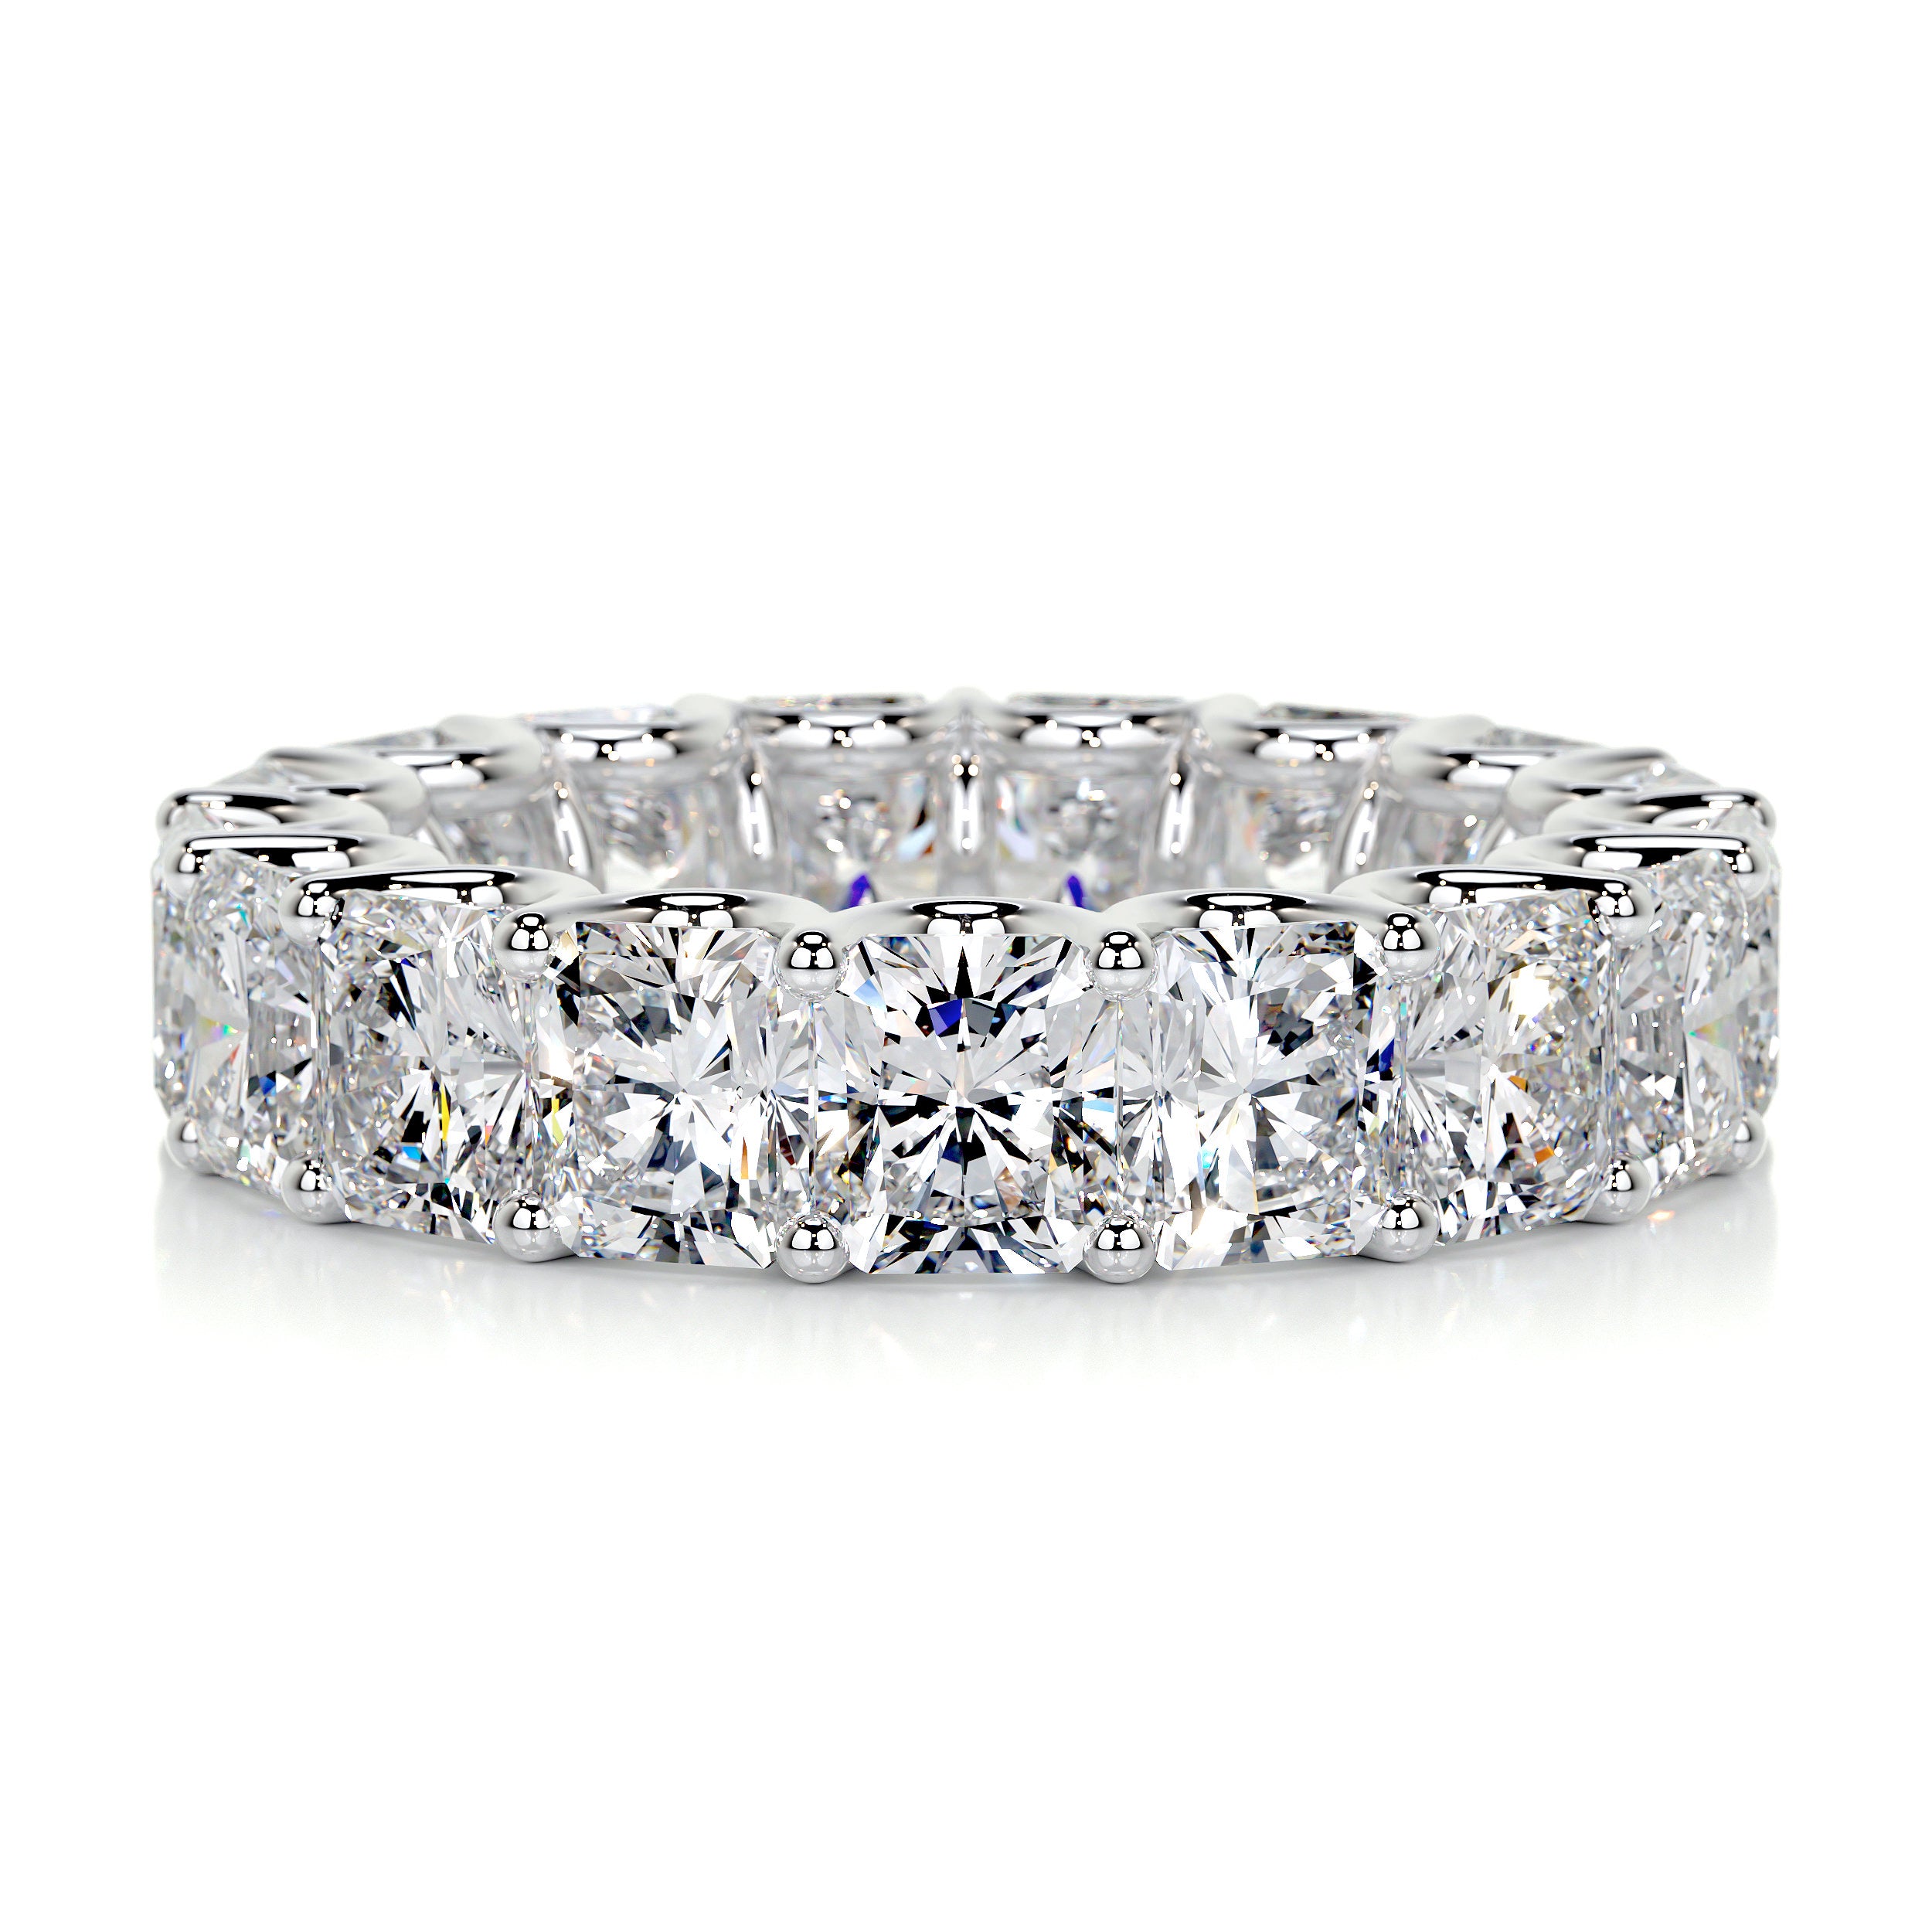 Andi Eternity Wedding Ring   (5 Carat) - 18K White Gold